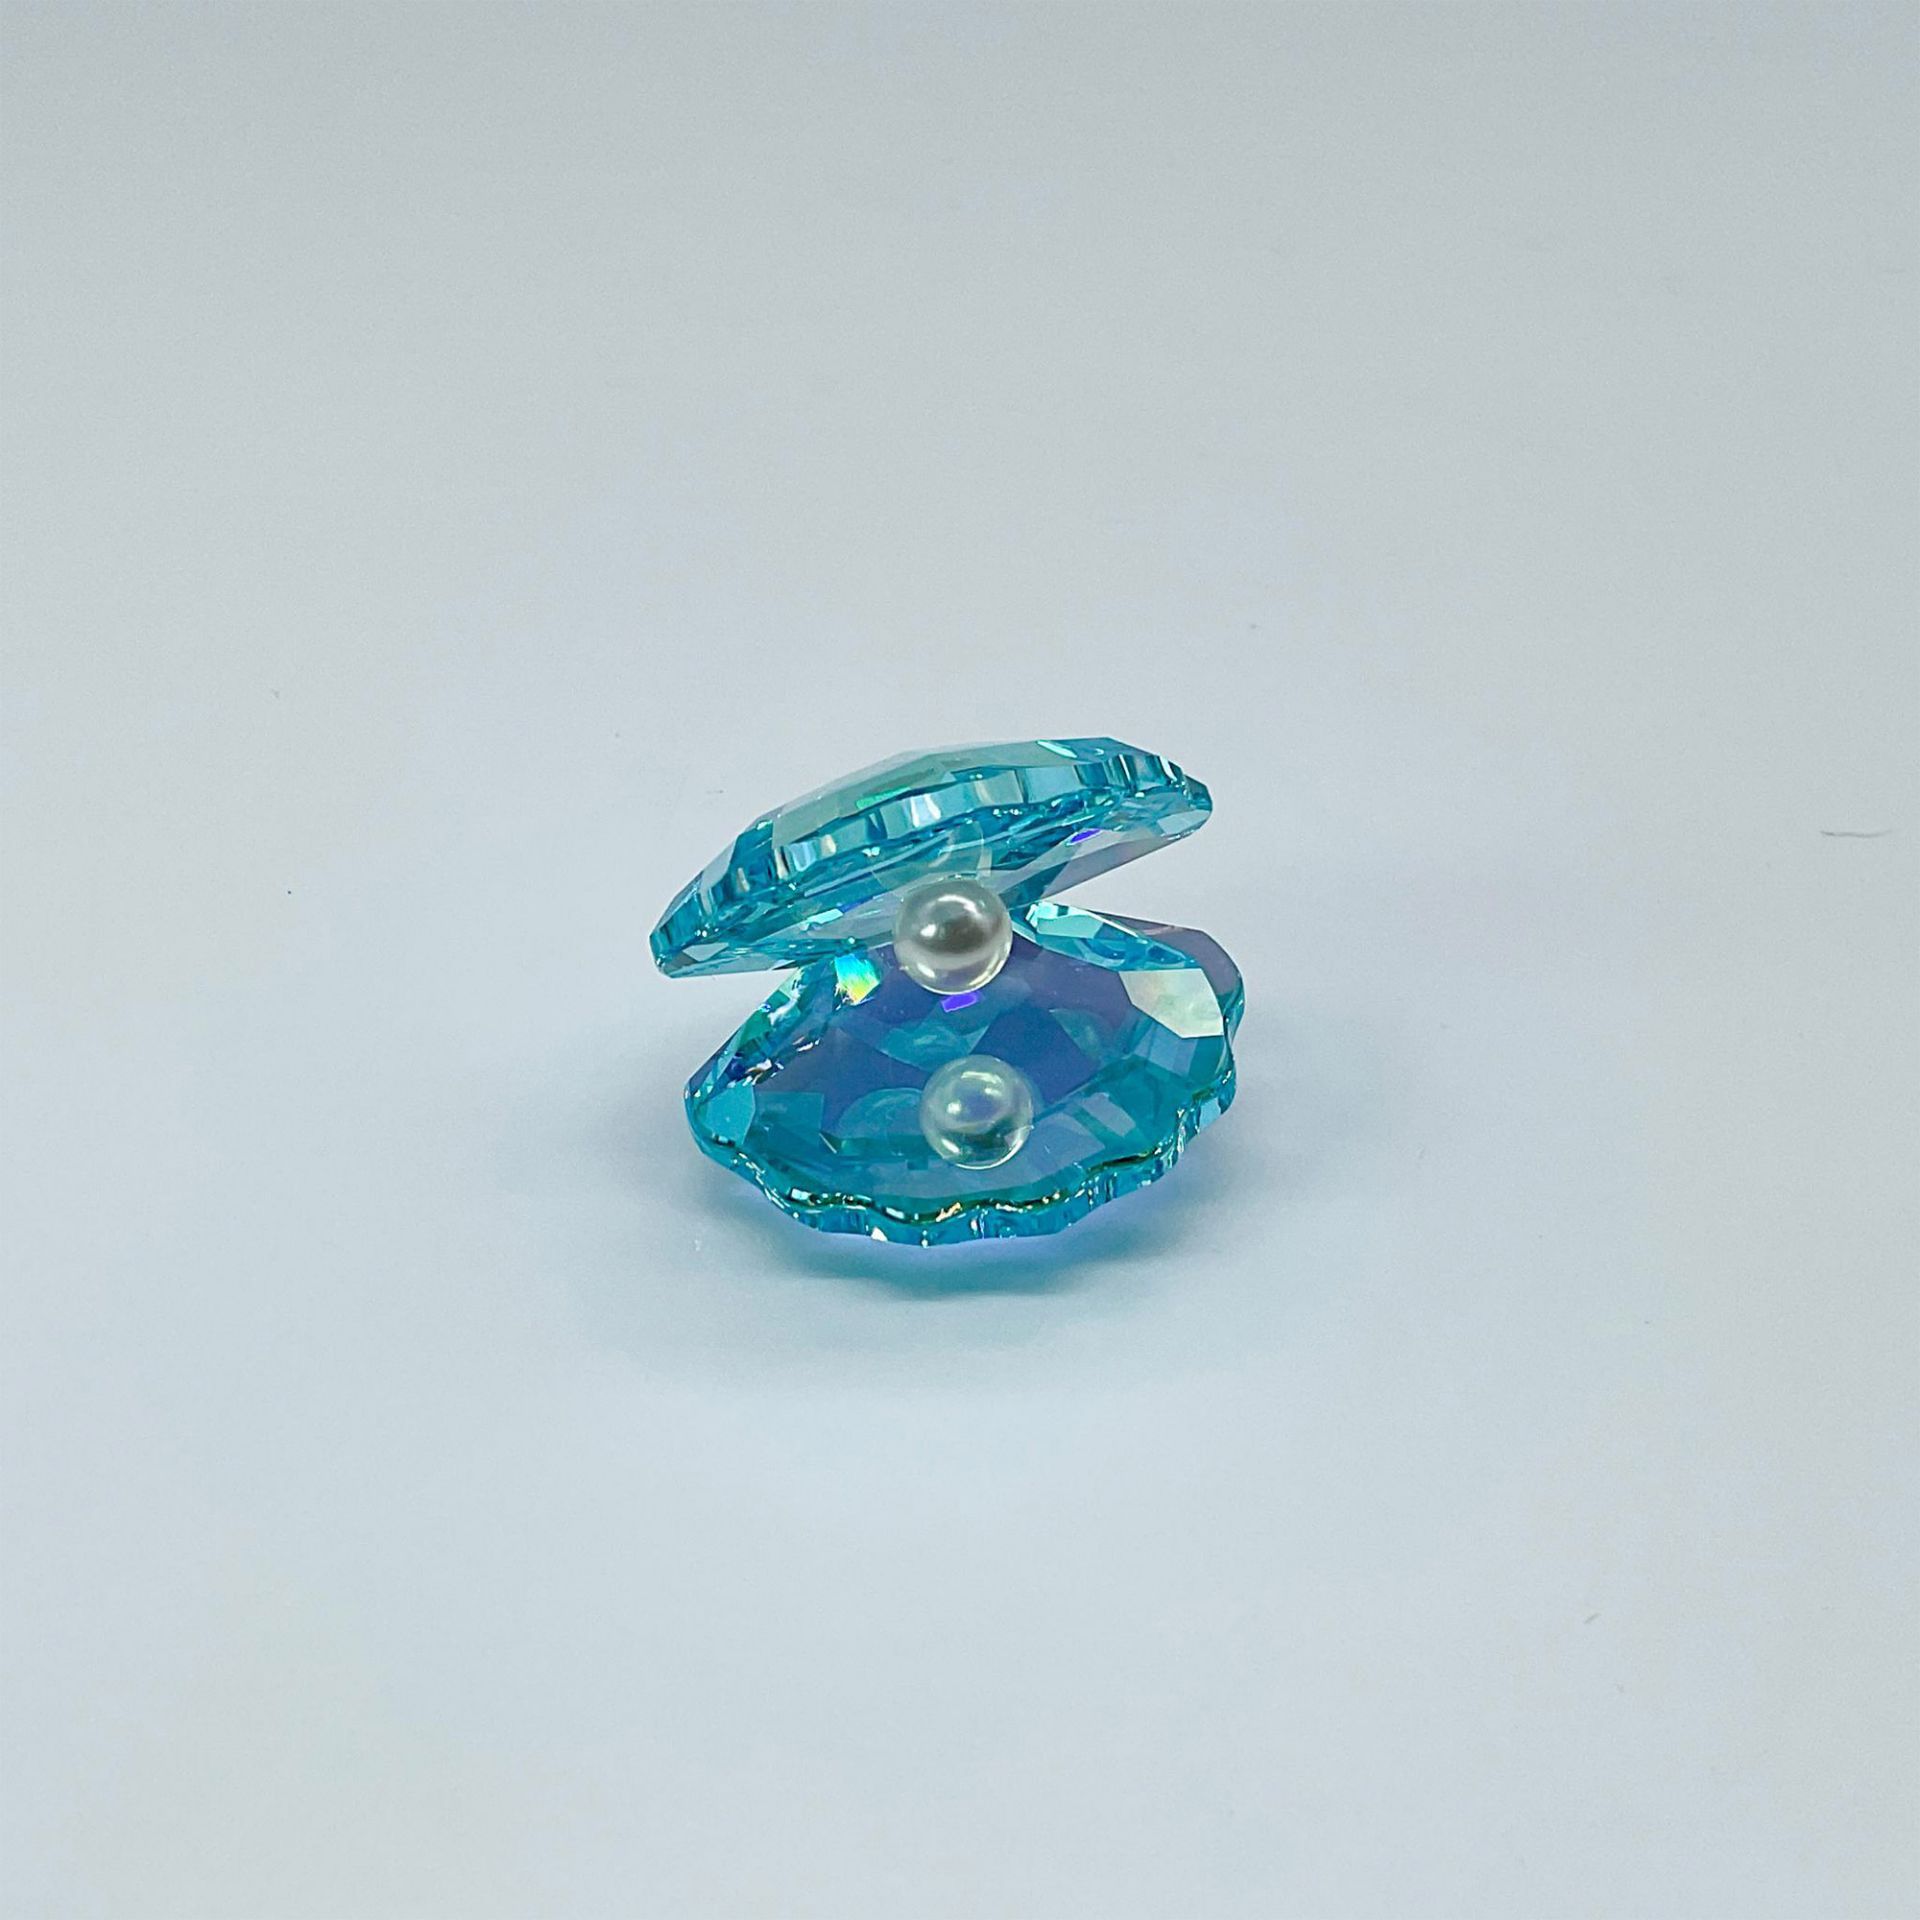 Swarovski Crystal Figurine, Small Blue Shell with Pearl